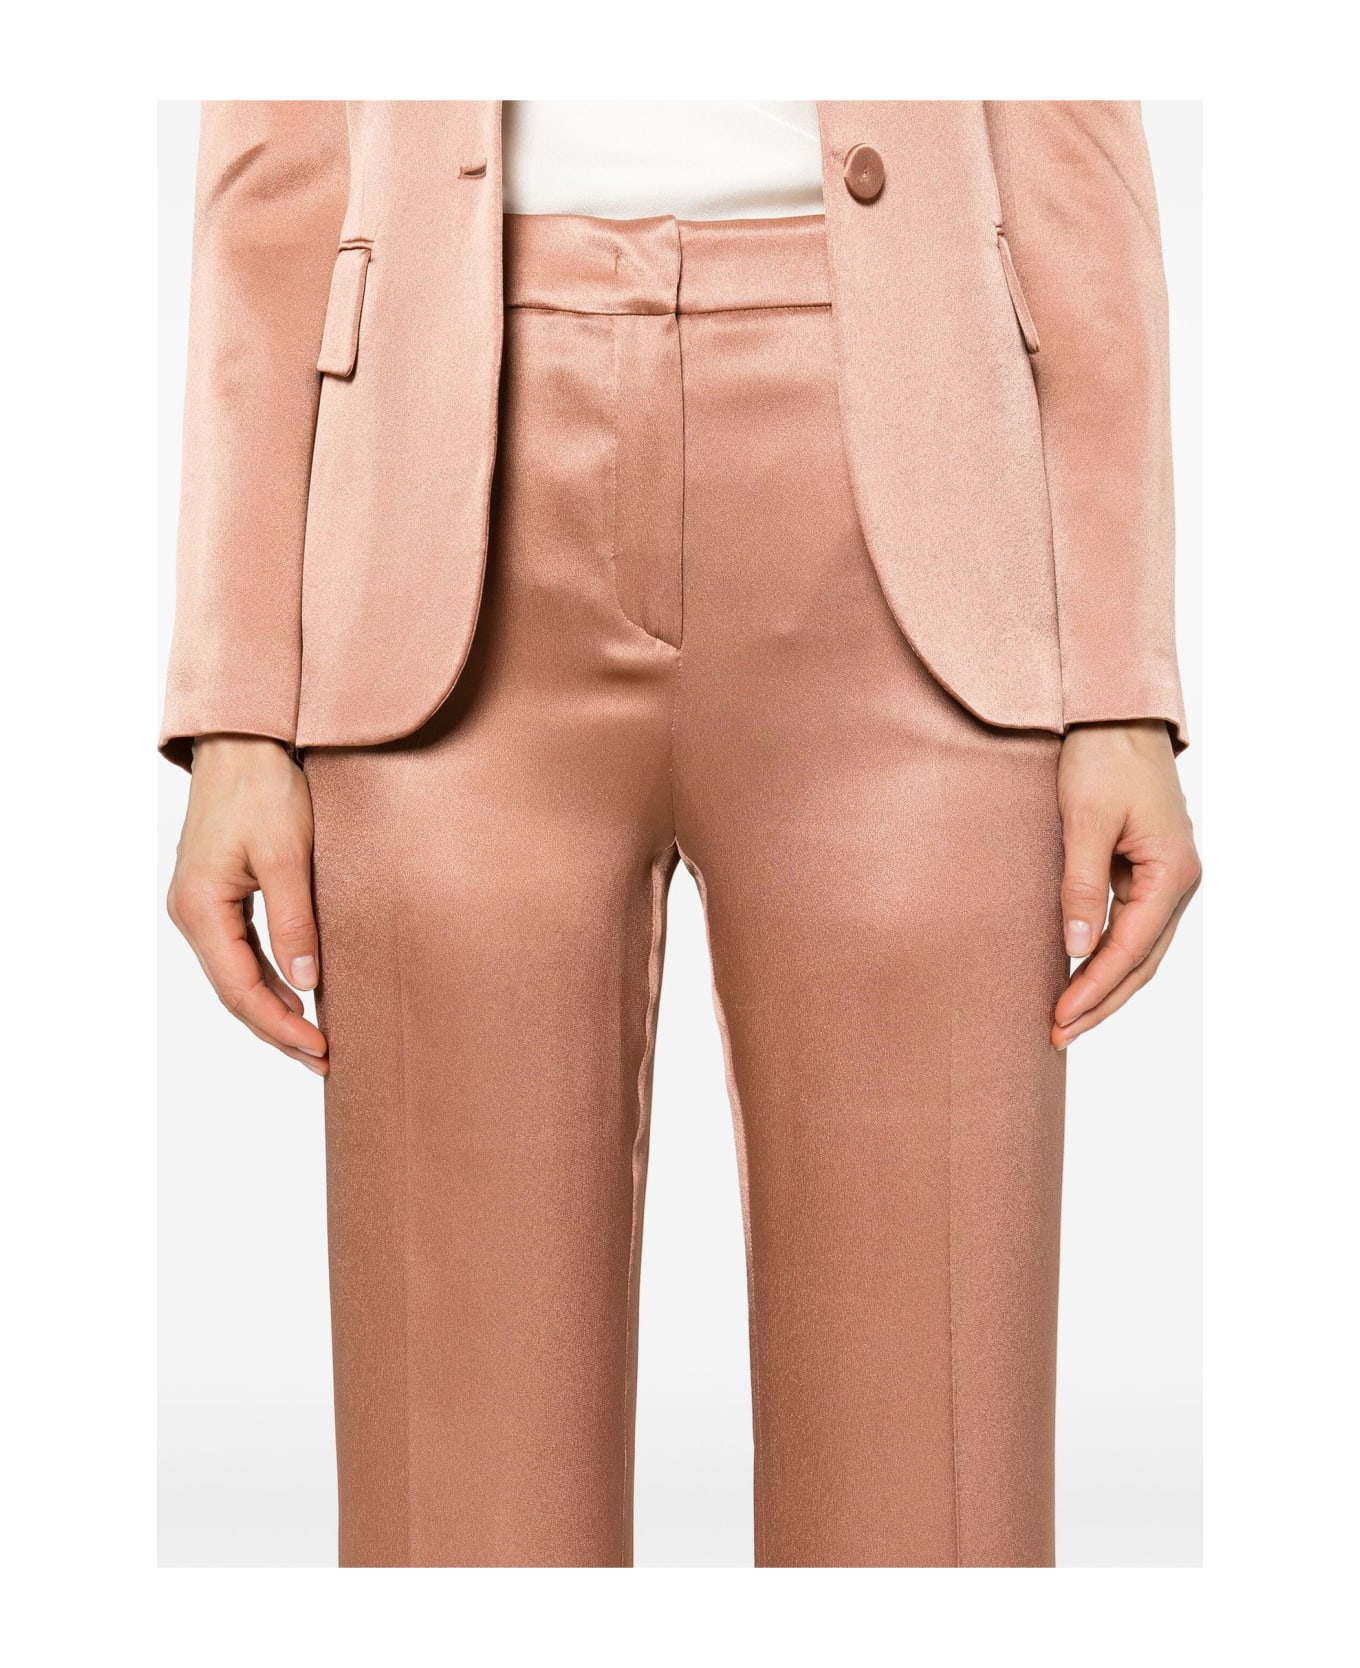 Alberta Ferretti Pink Satin Weave Trousers - Pink